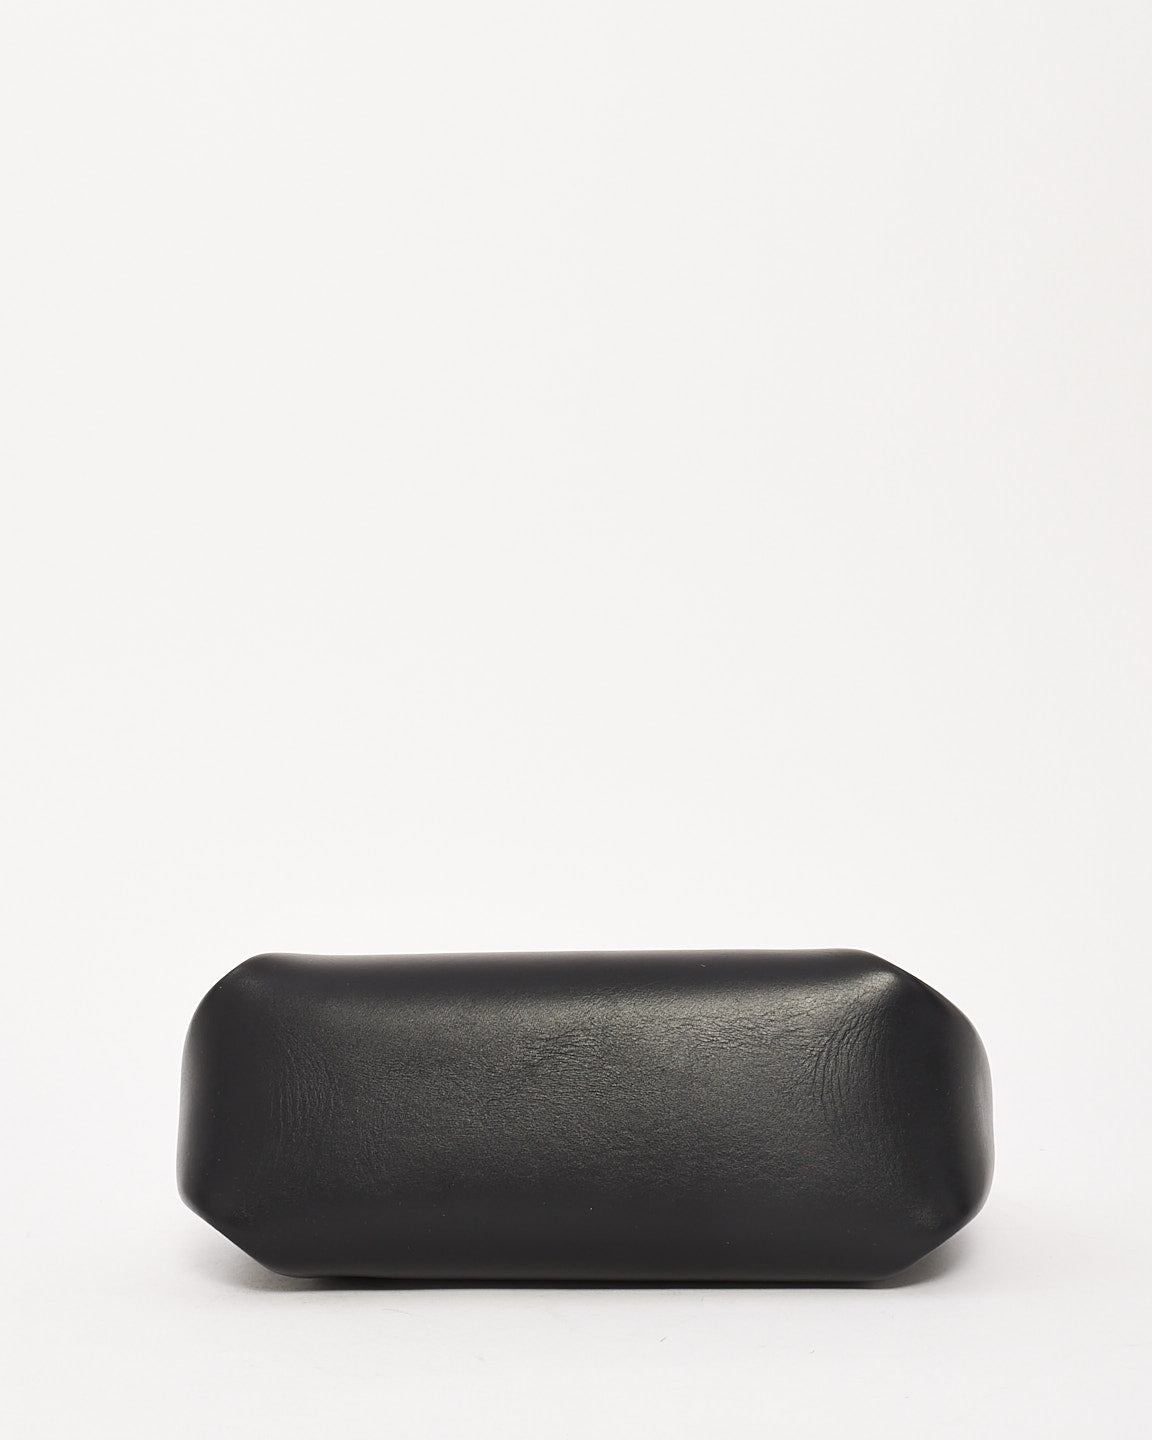 Alexander Wang Black Leather Medium Marquess Hobo Bag